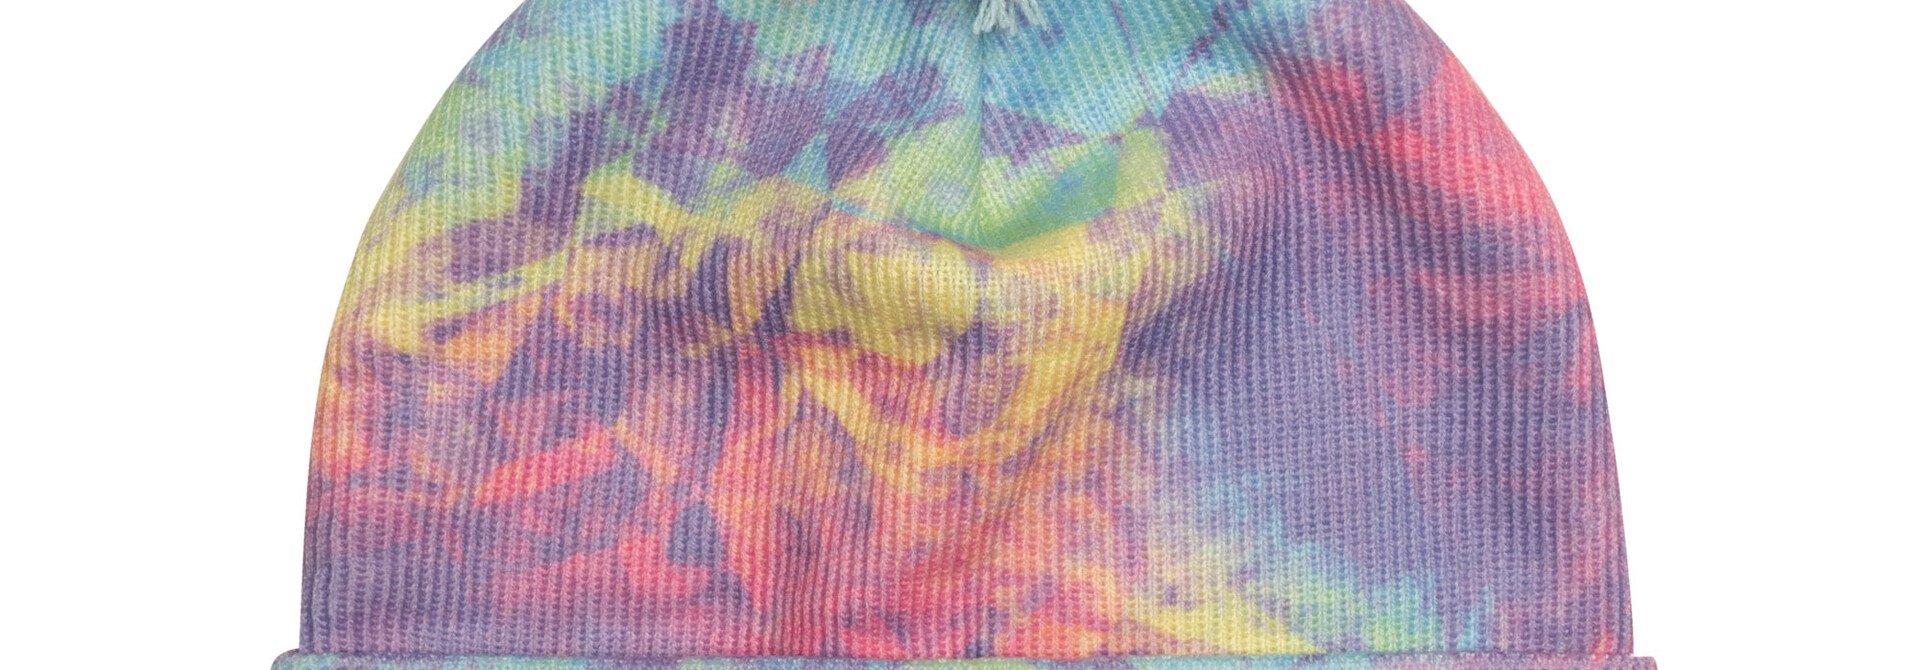 Tuque en tricot - RAINBOW